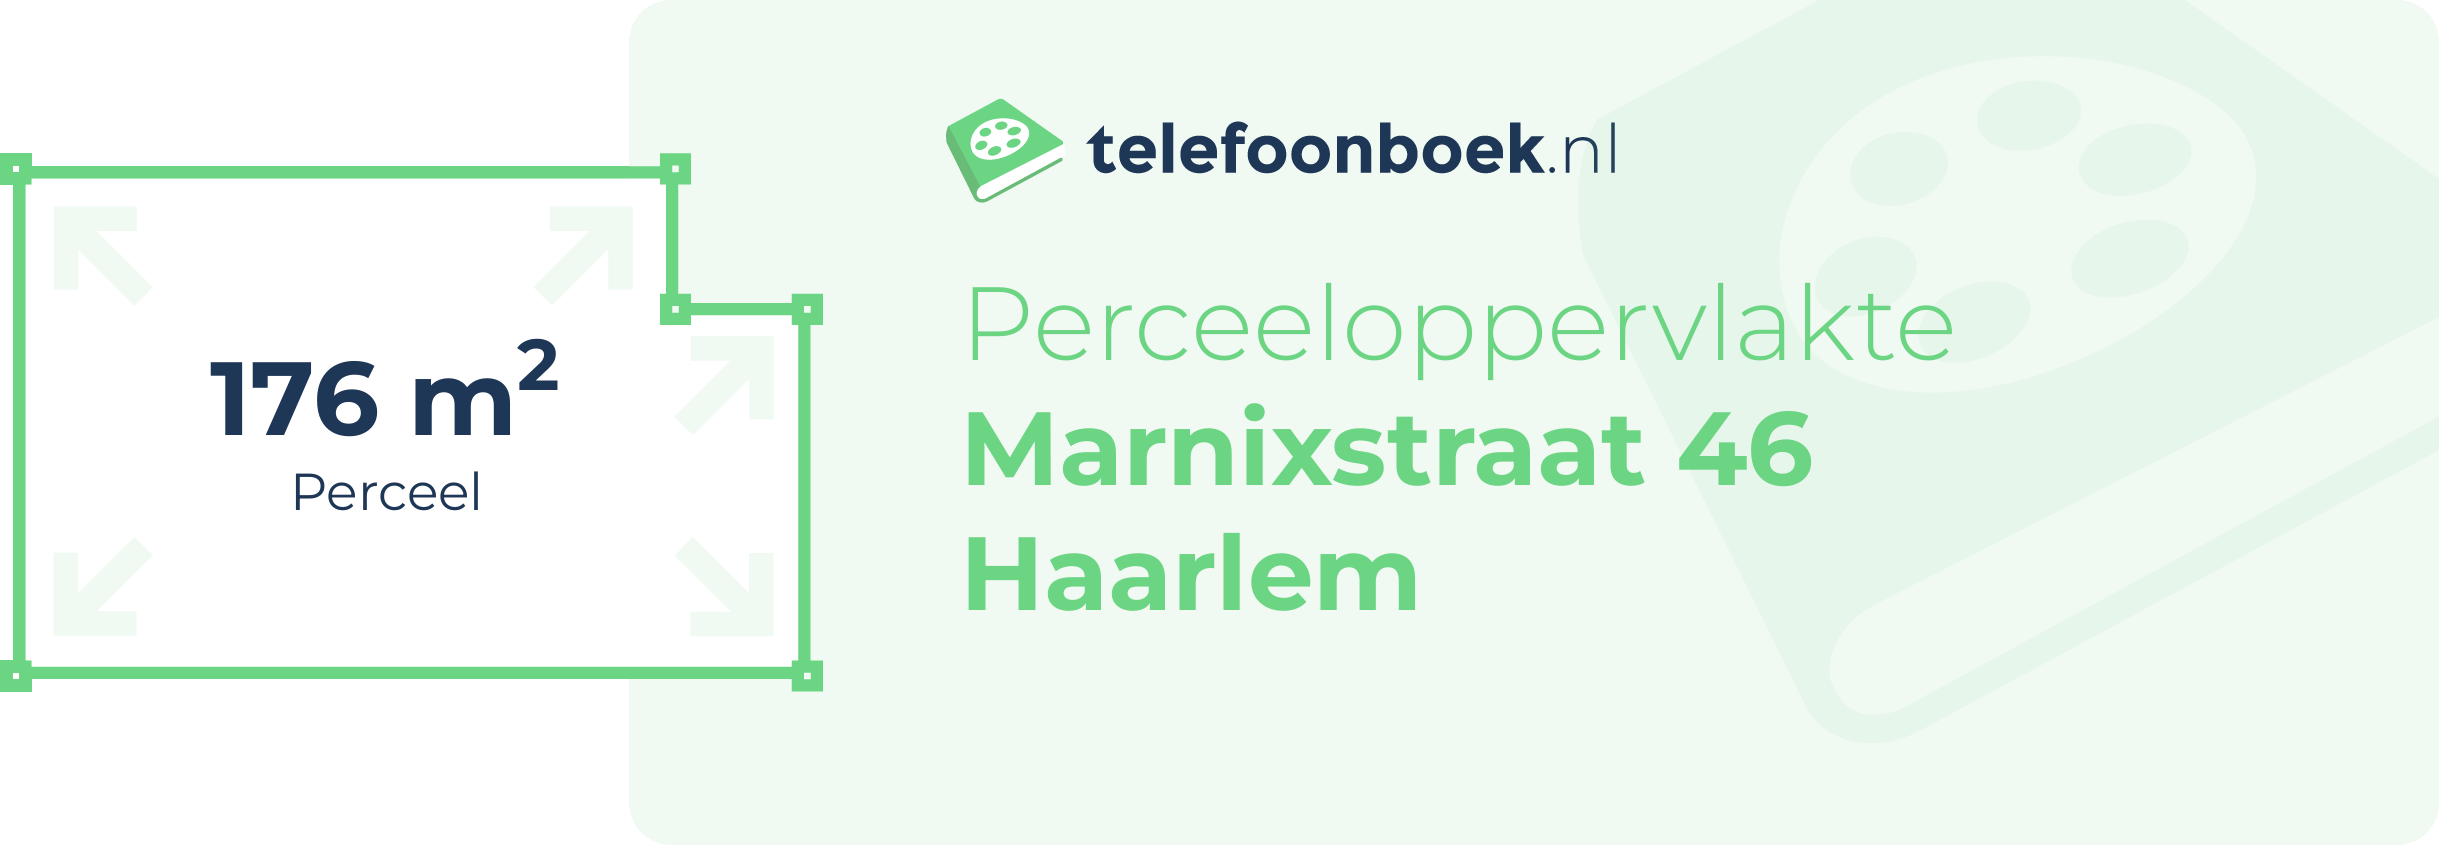 Perceeloppervlakte Marnixstraat 46 Haarlem